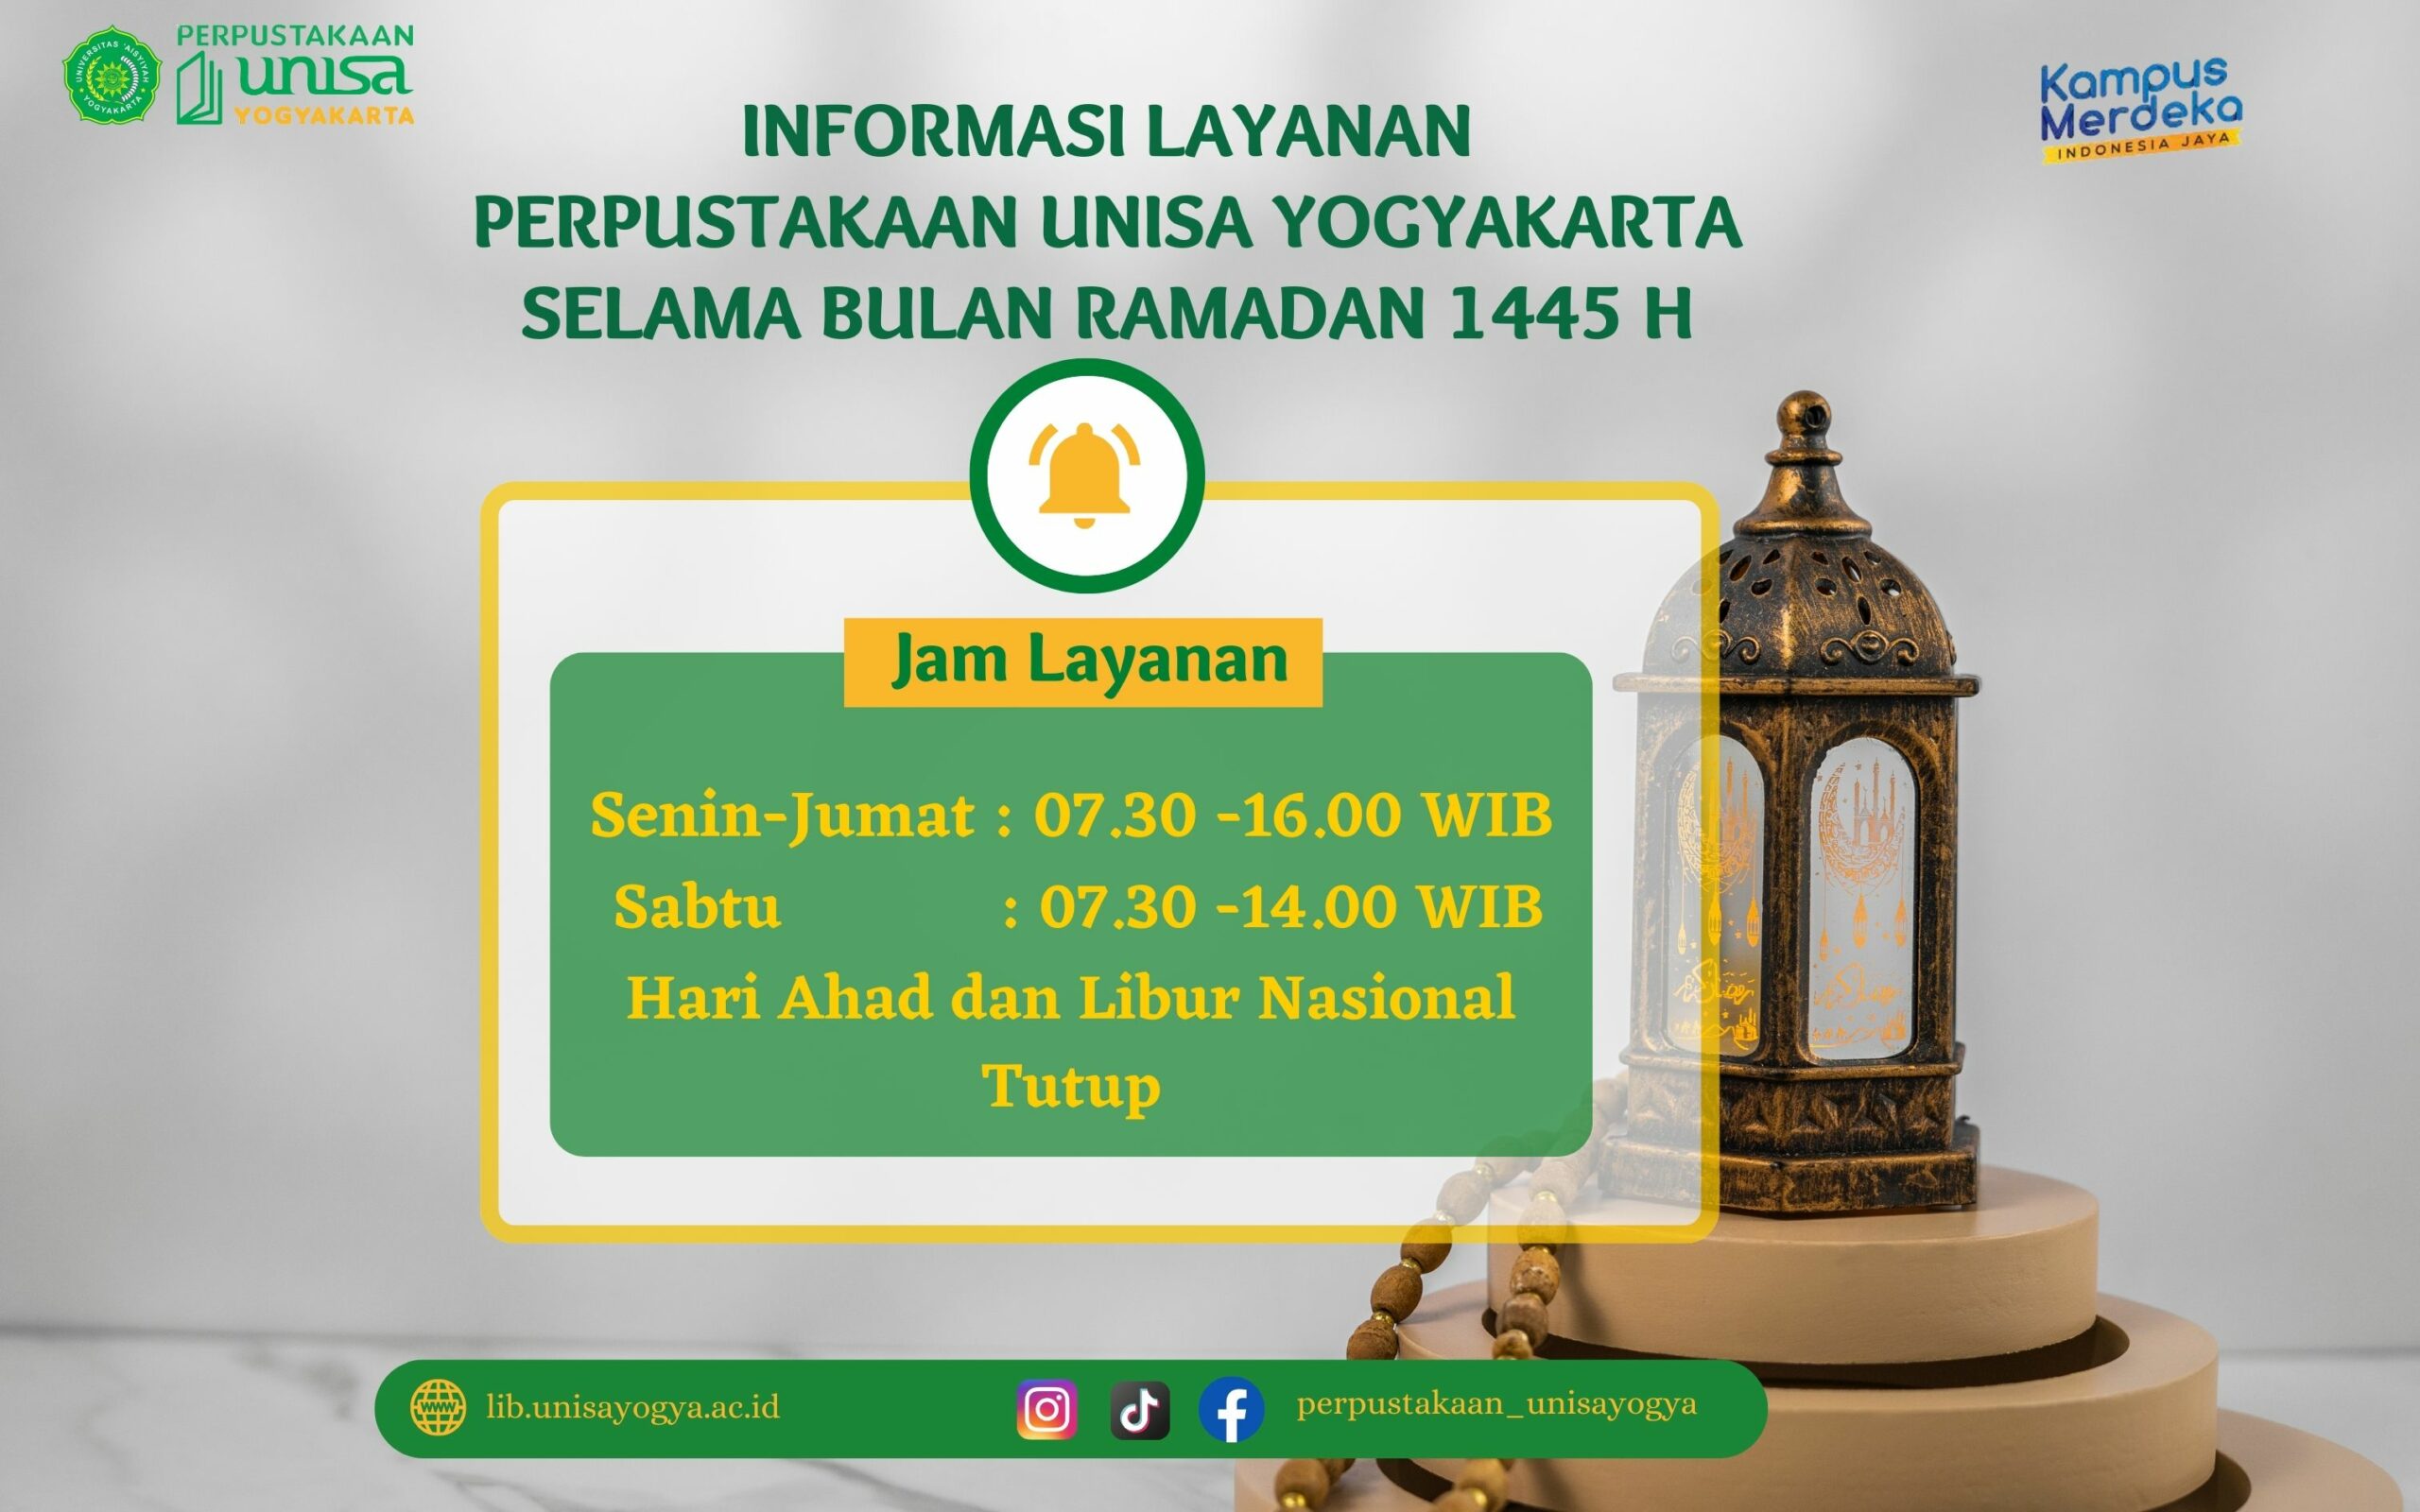 Pengumuman Jam Layanan Perpustakaan UNISA Yogyakarta Selama Bulan Ramadan 1445 H